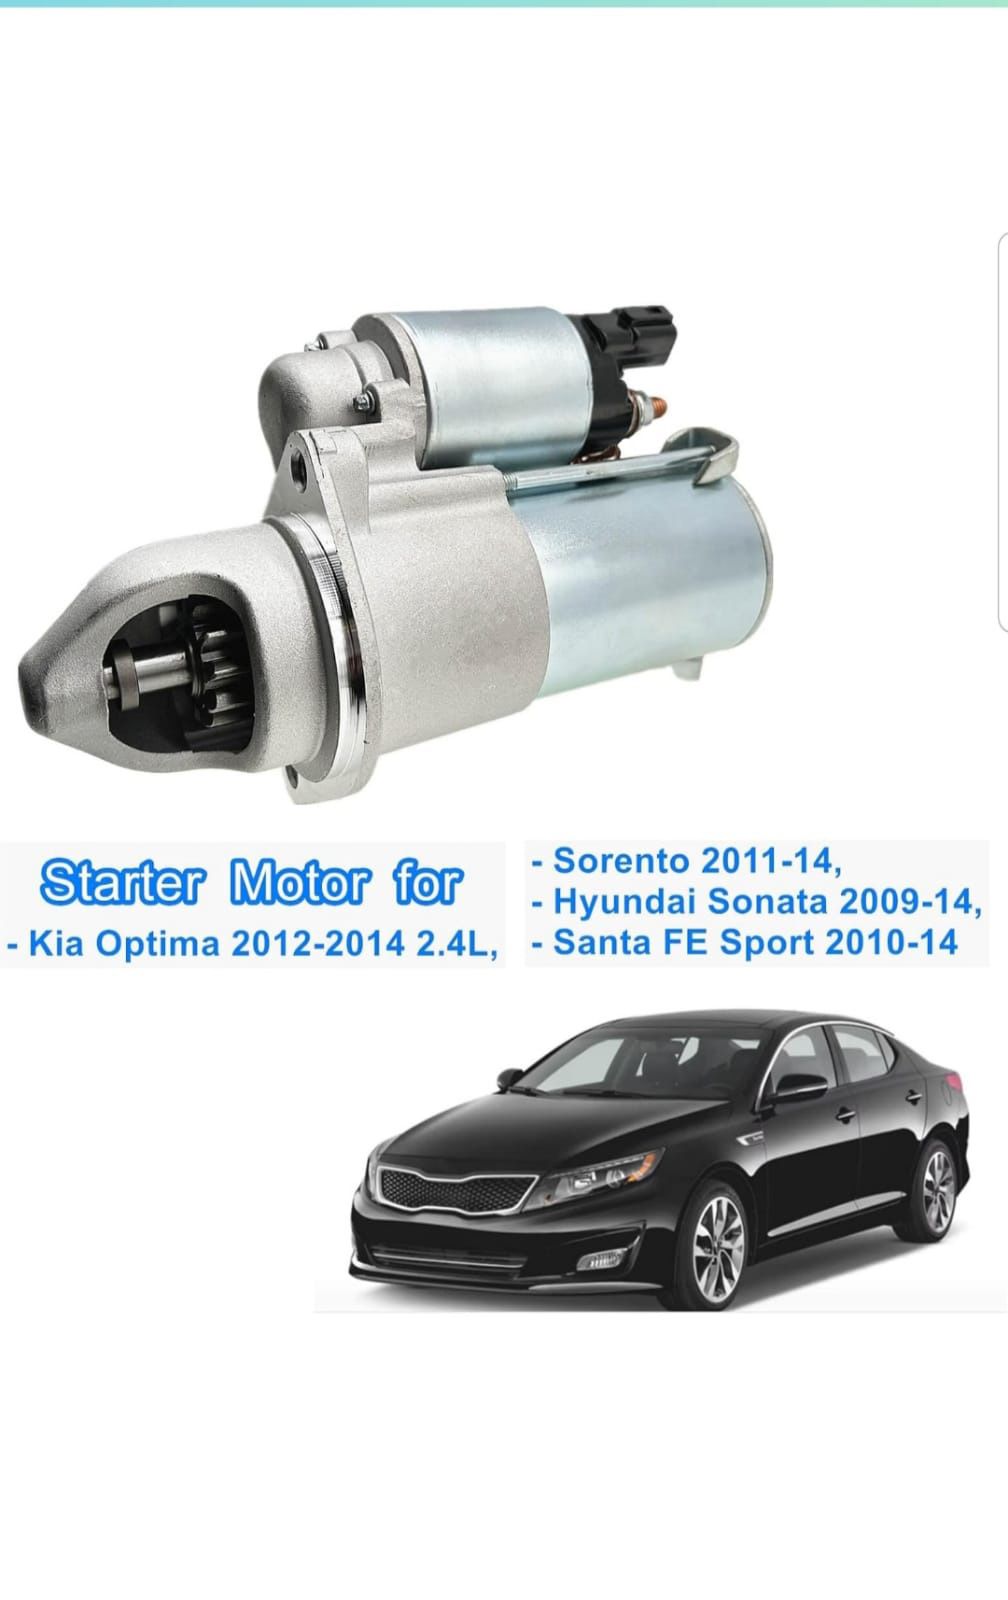 Starter Motor for Kia Optima? Hyundai , Sorento, Santa FR